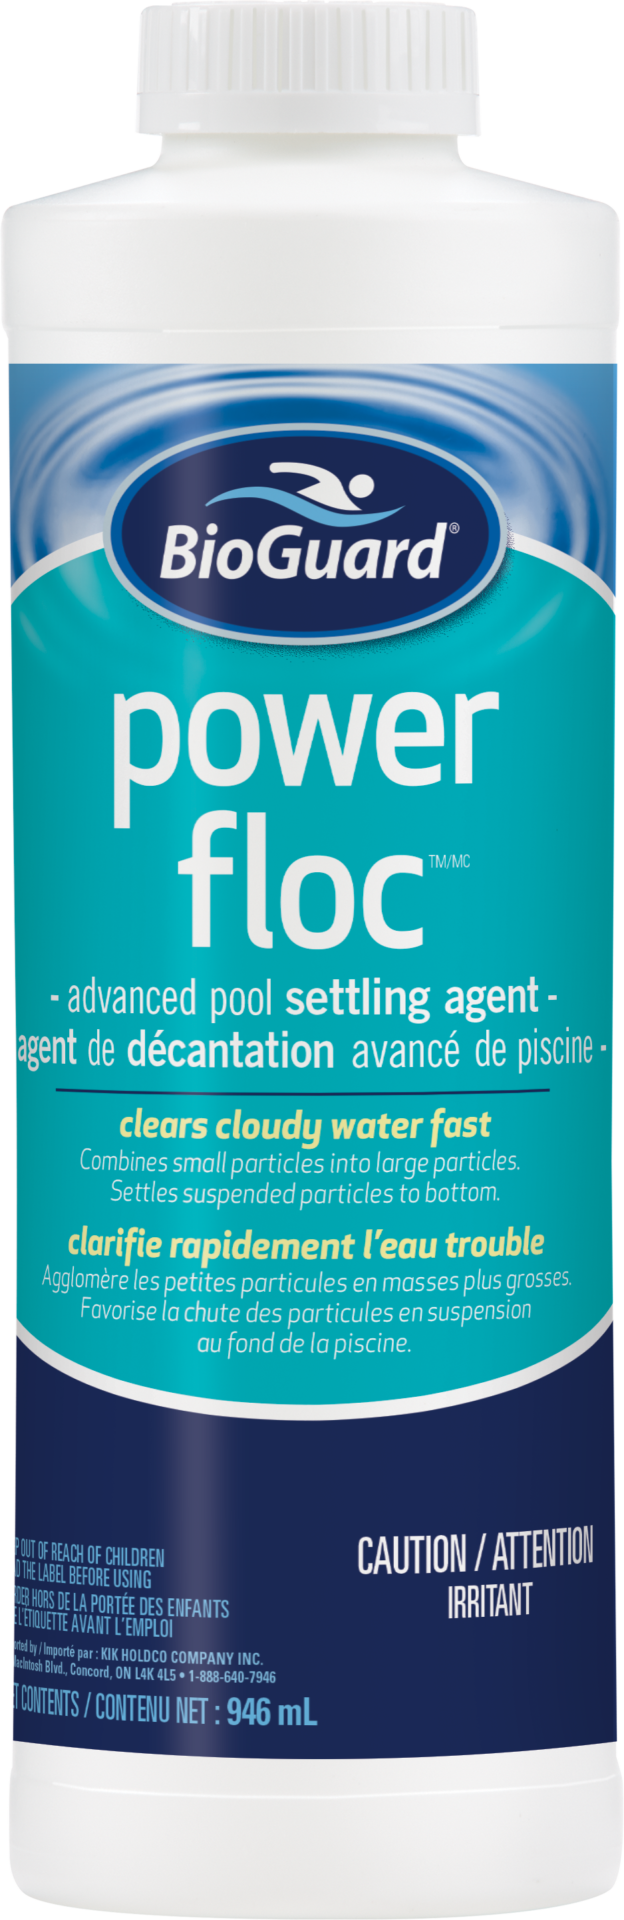 BioGuard Power Floc 946ml - POWER FLOC - 946ml